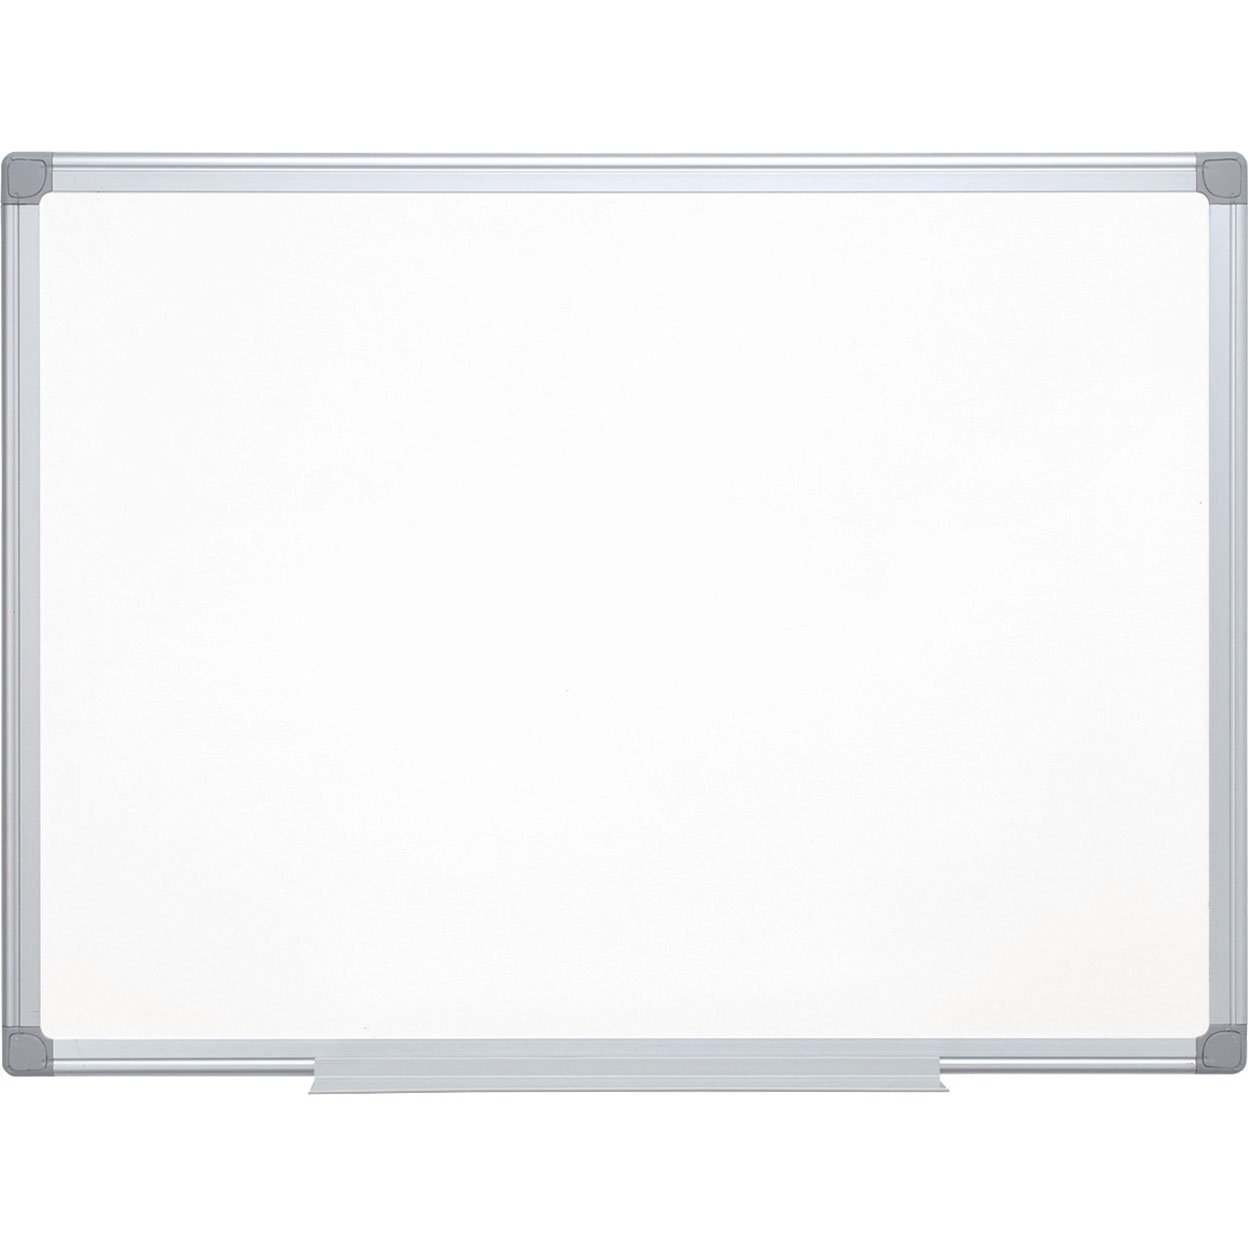 Q-connect lakeret whiteboardtavle 600 mm x 900 mm, Stål/Aluminium